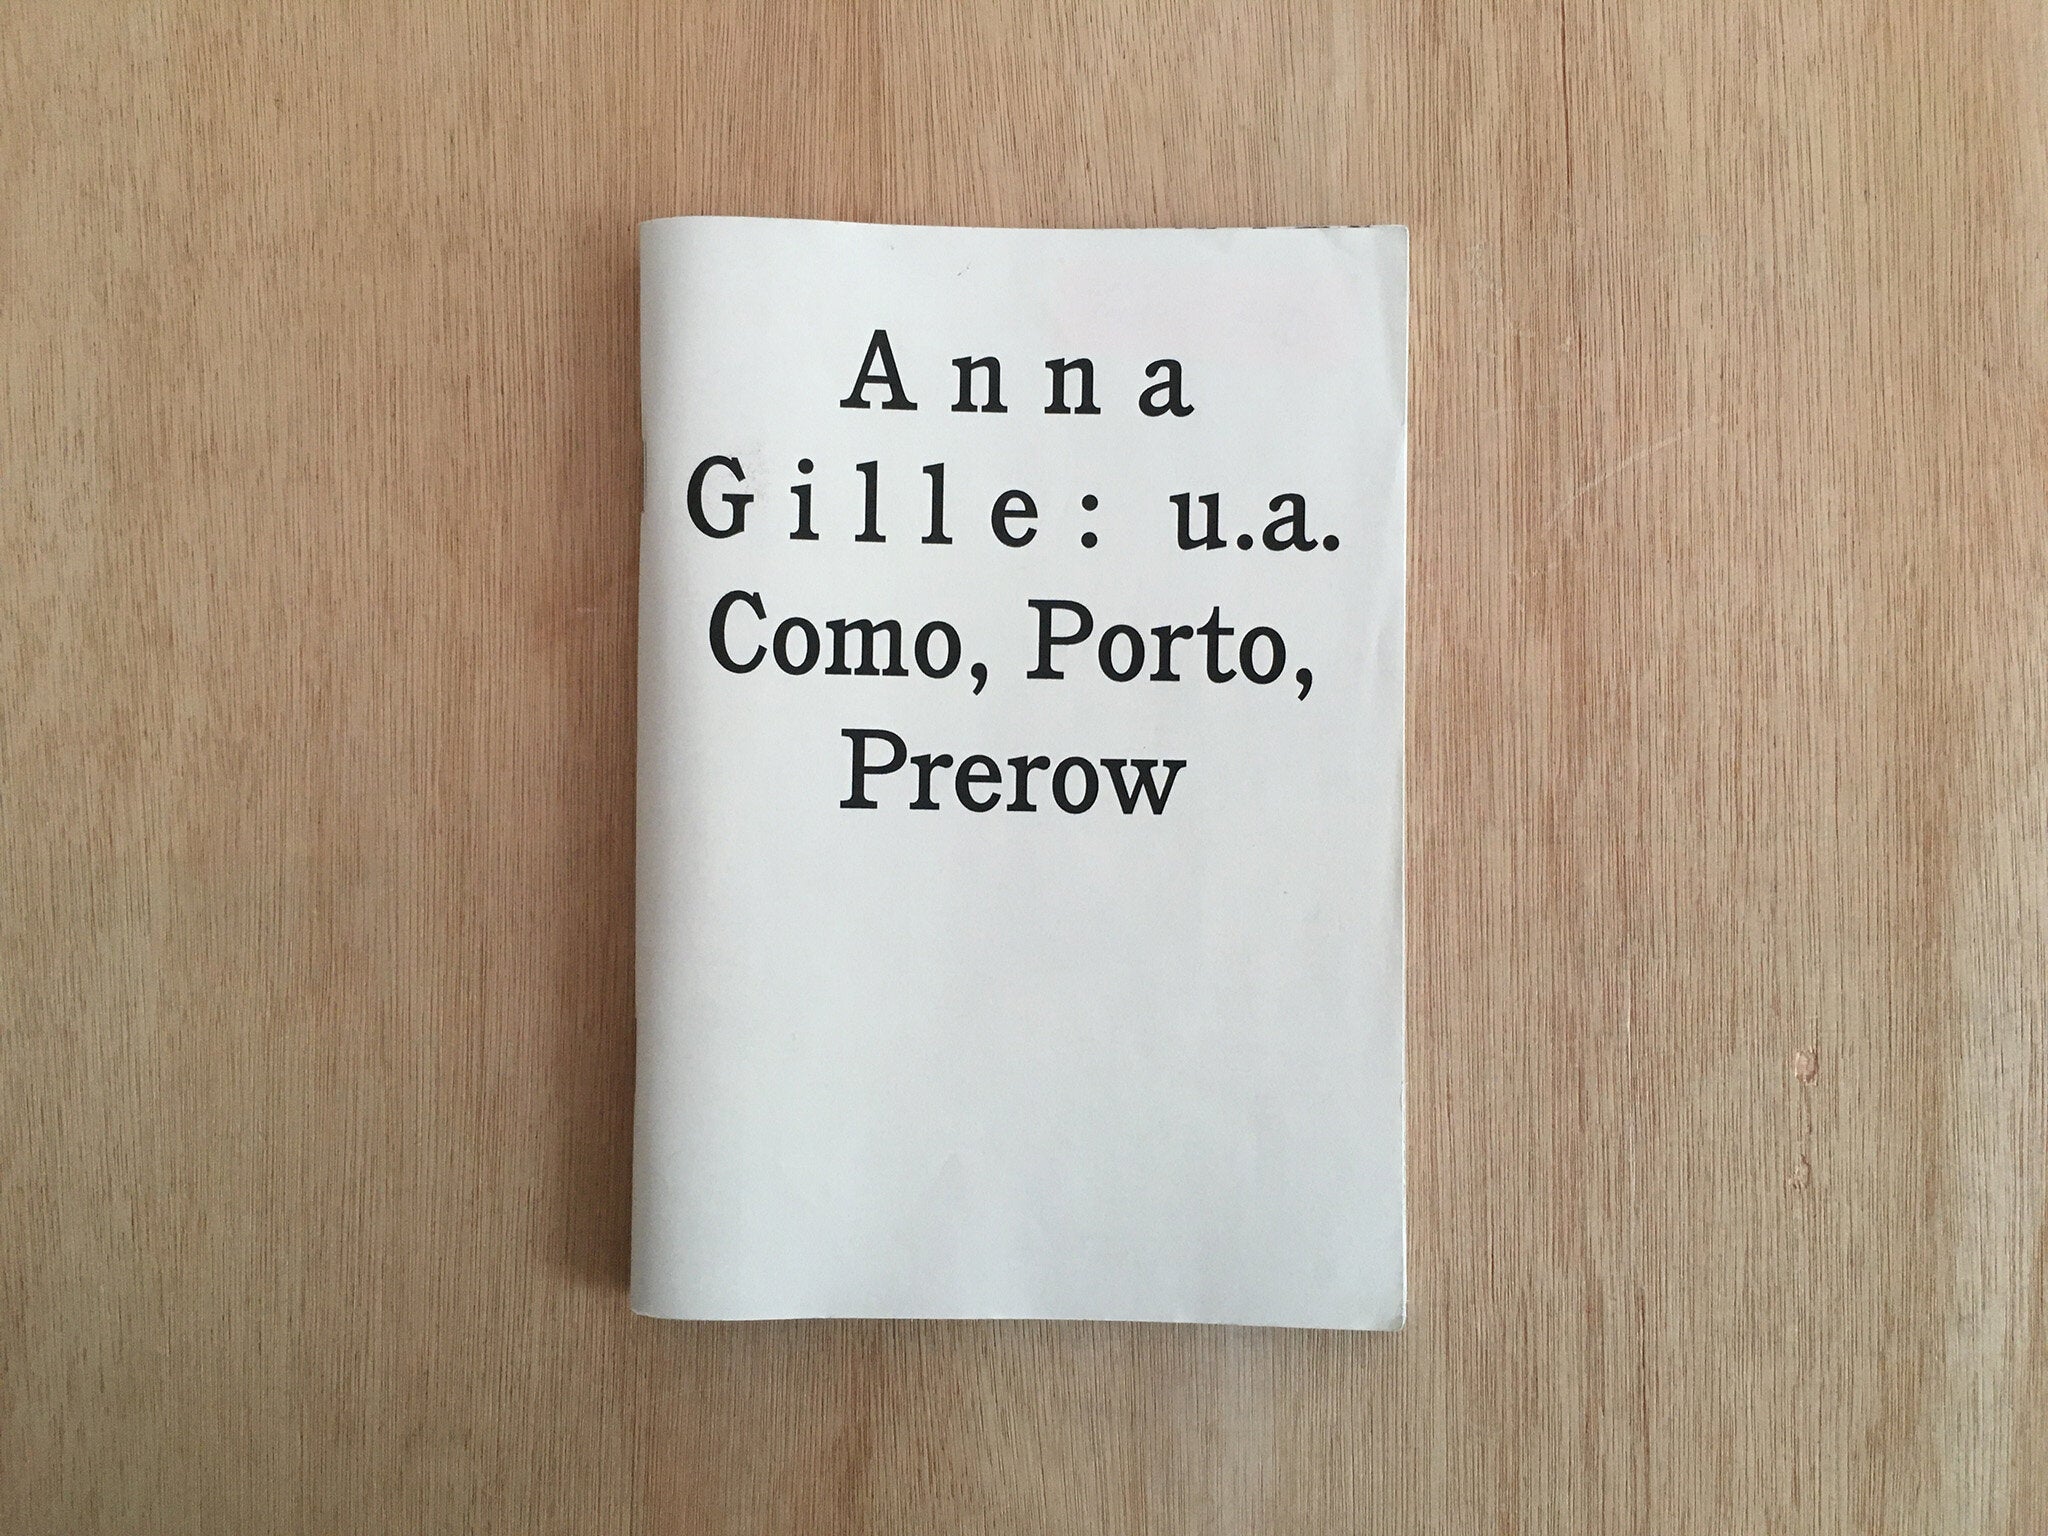 U.A. COMO, PORTO, PREROW By Anna Gille